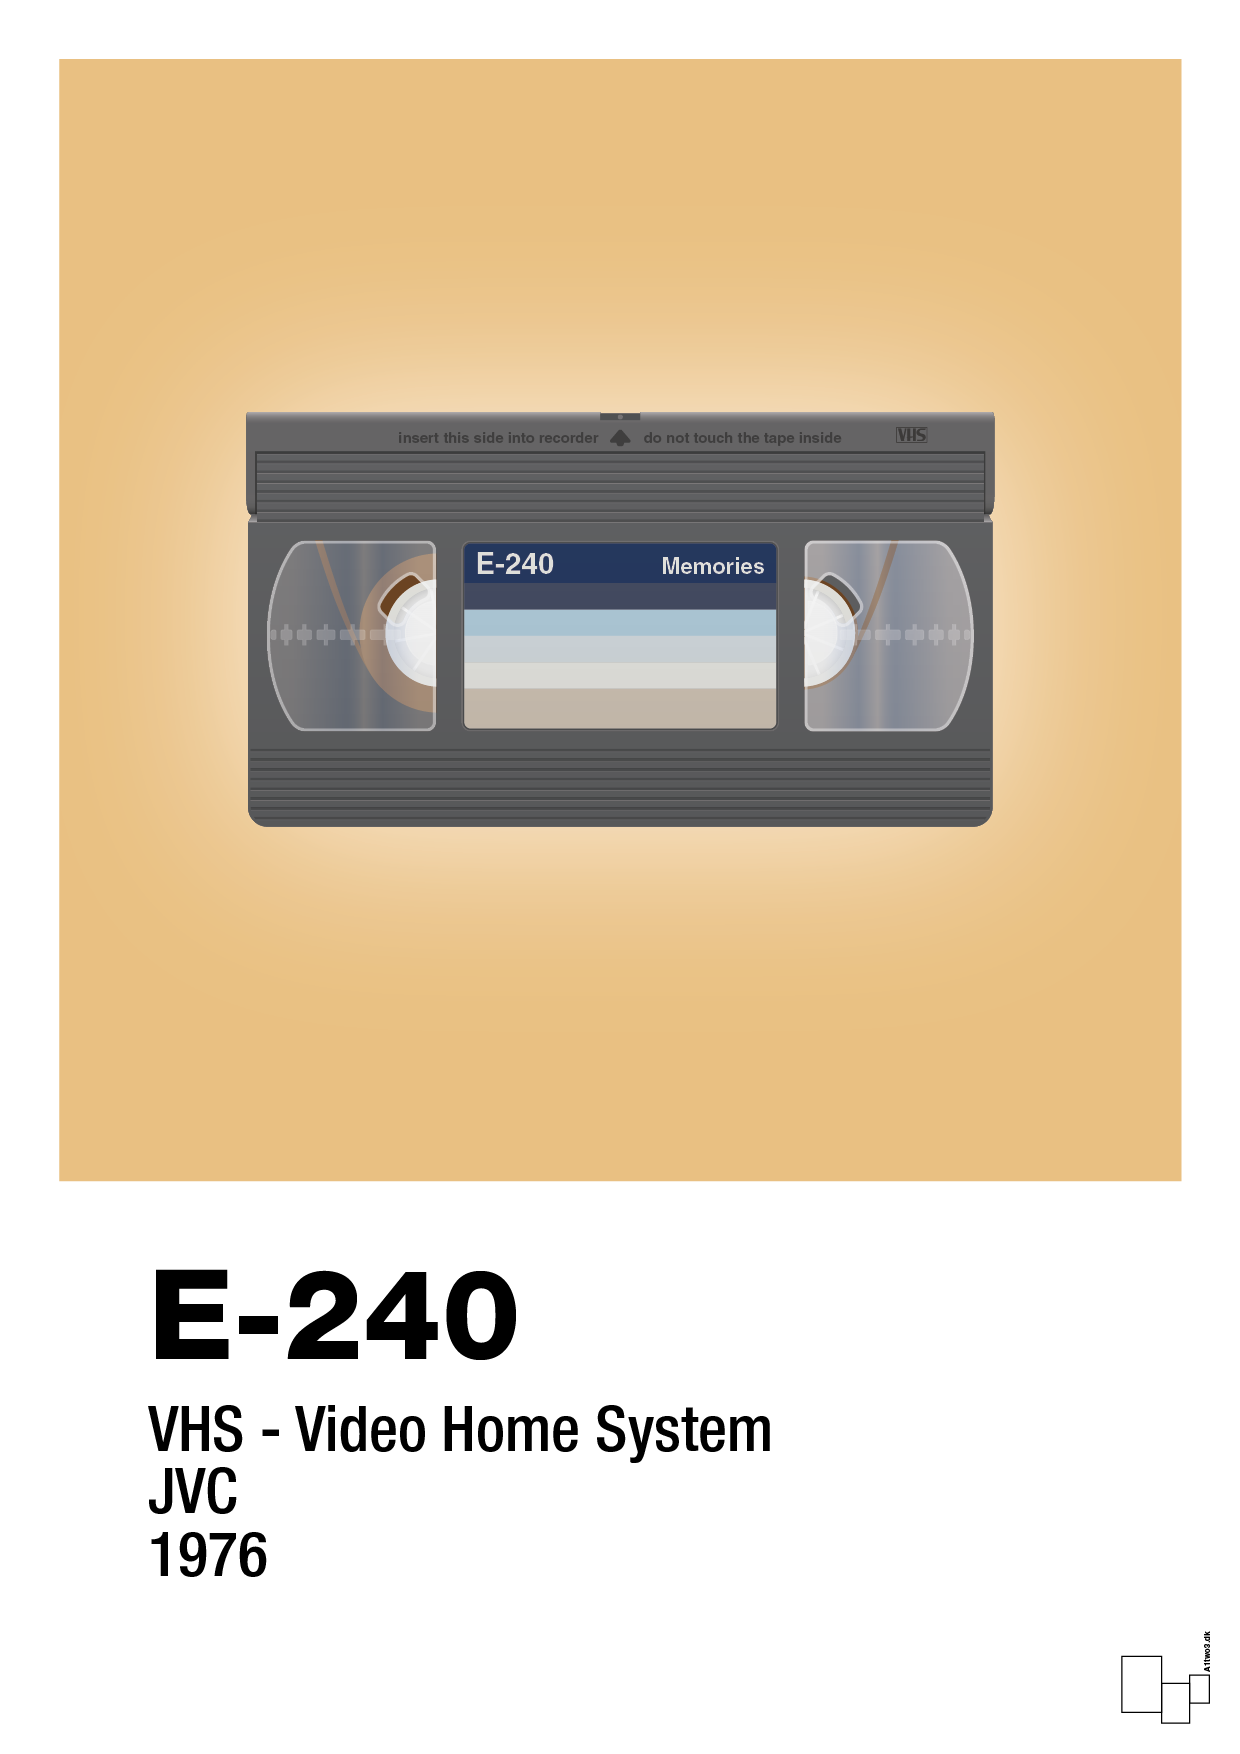 videobånd e-240 - Plakat med Grafik i Charismatic